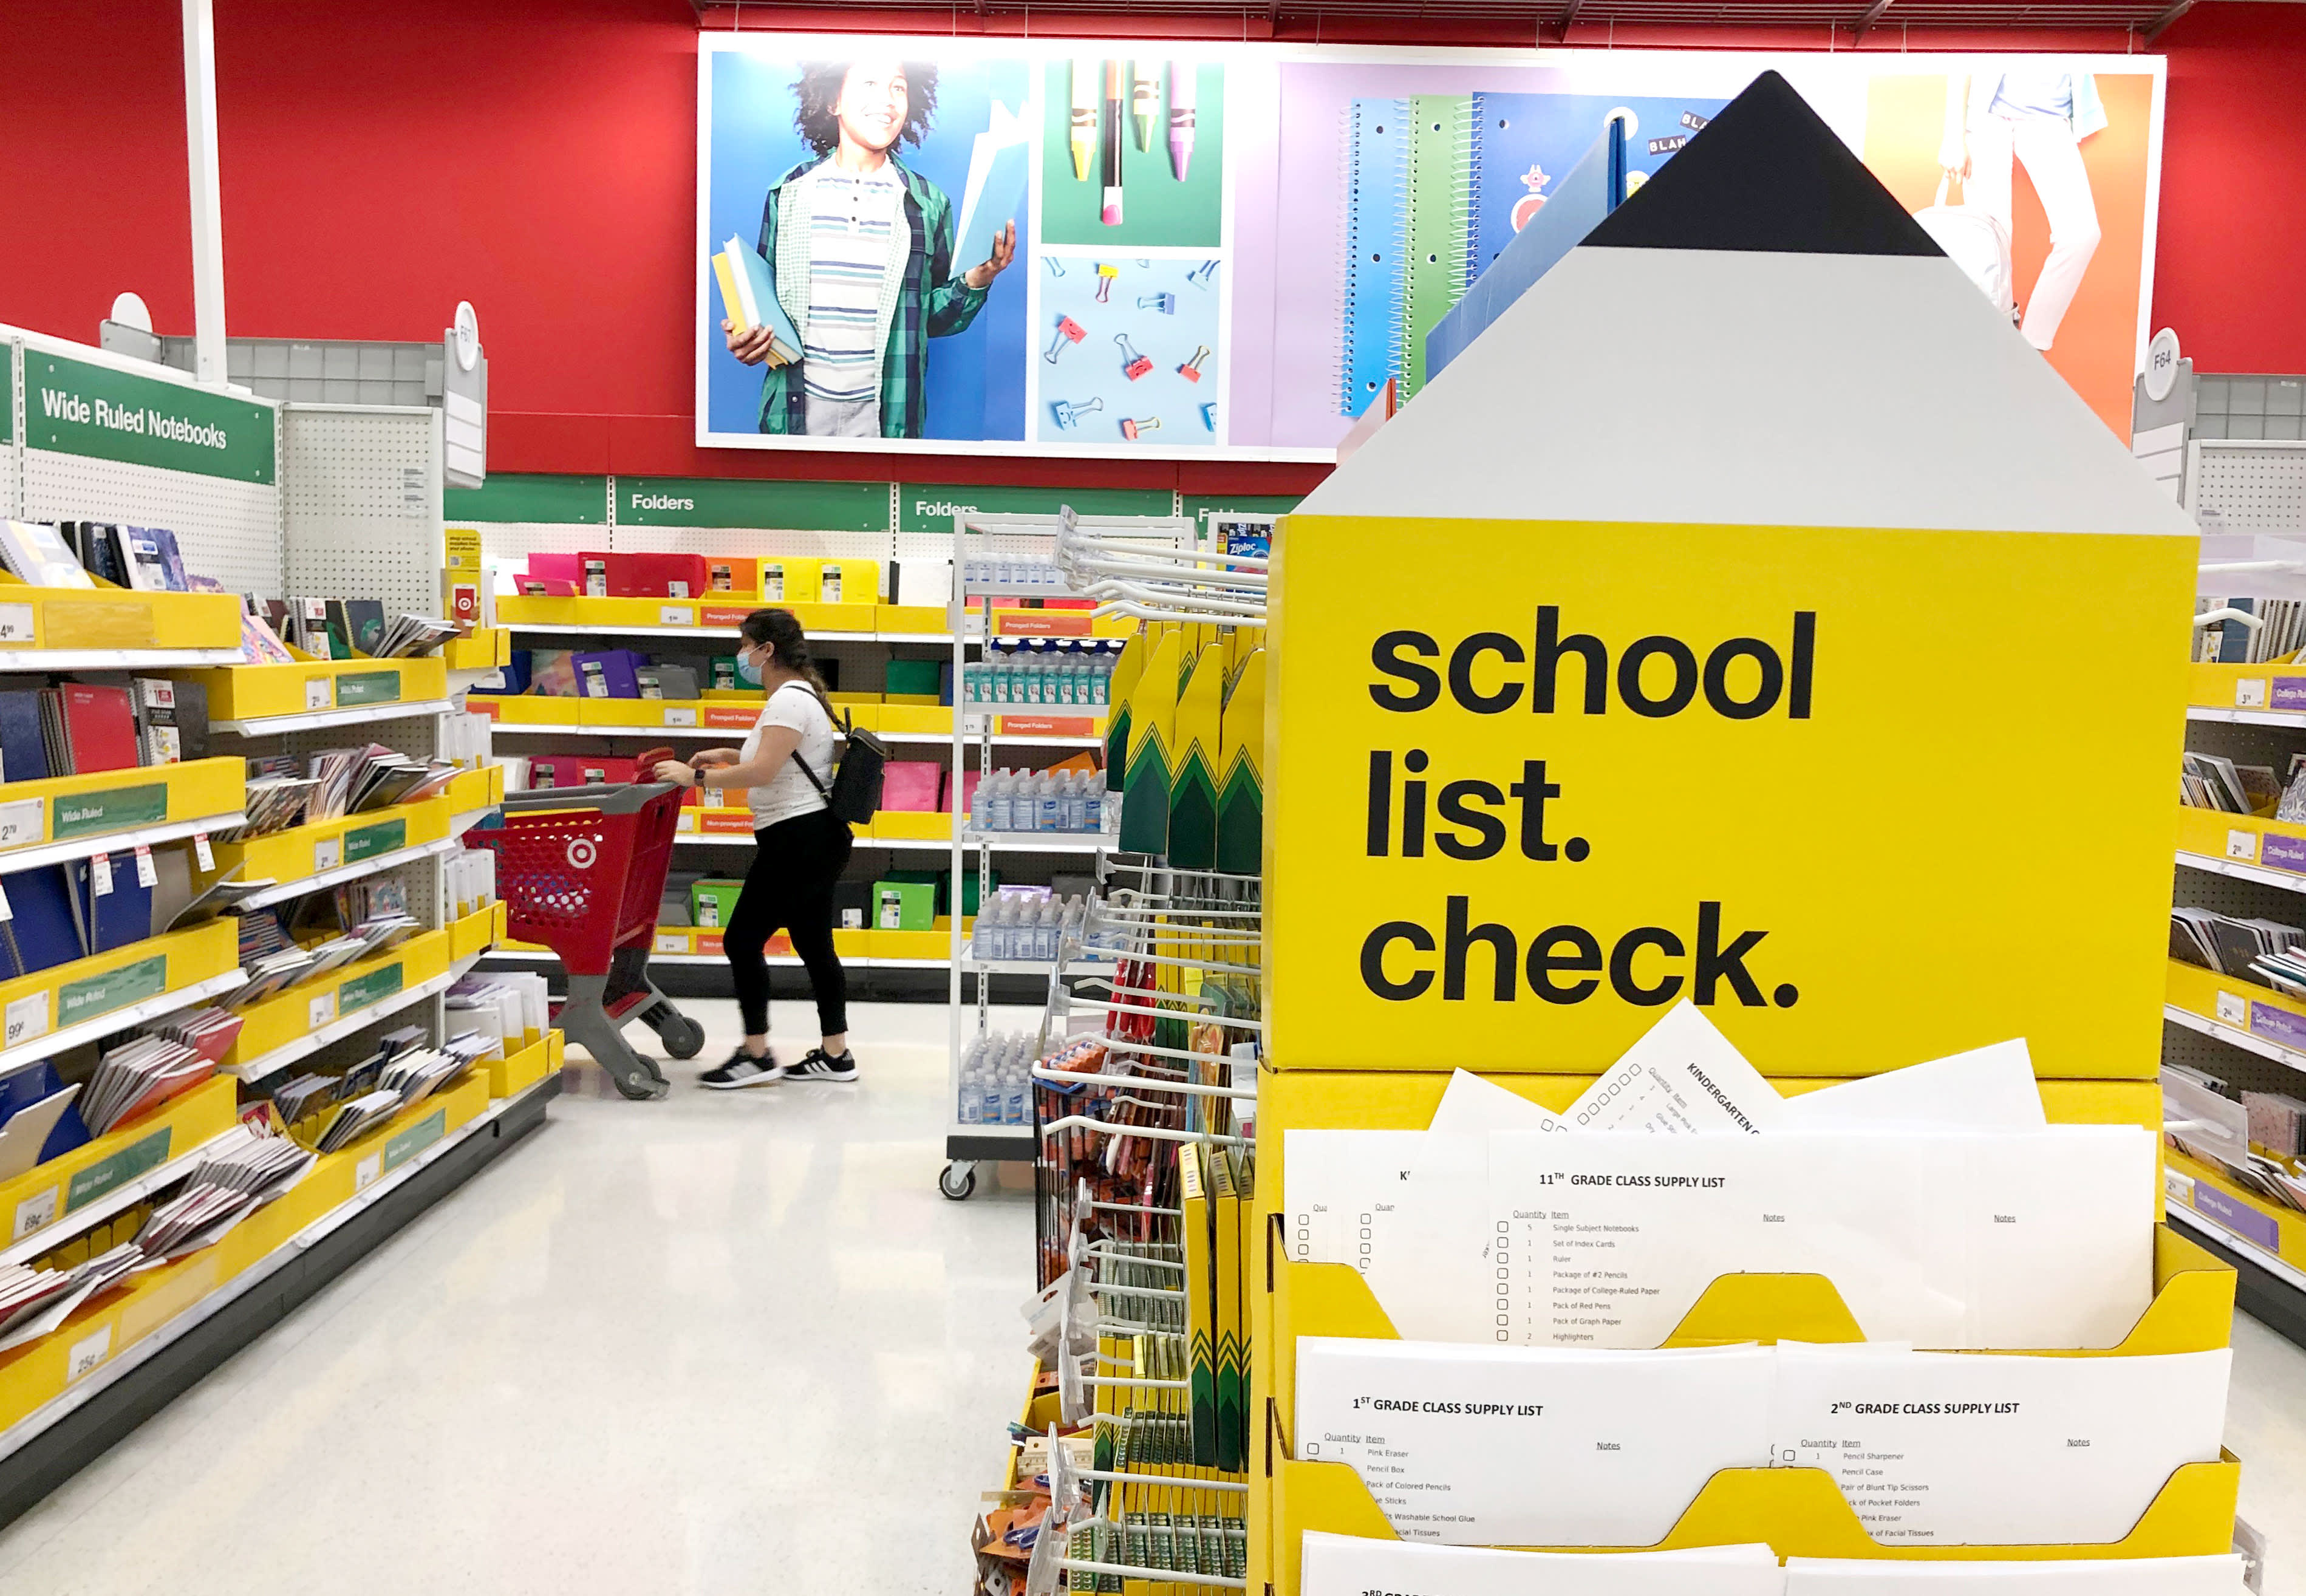 Target earnings top estimates, and retailer raises forecast as back-to-school spending kicks in